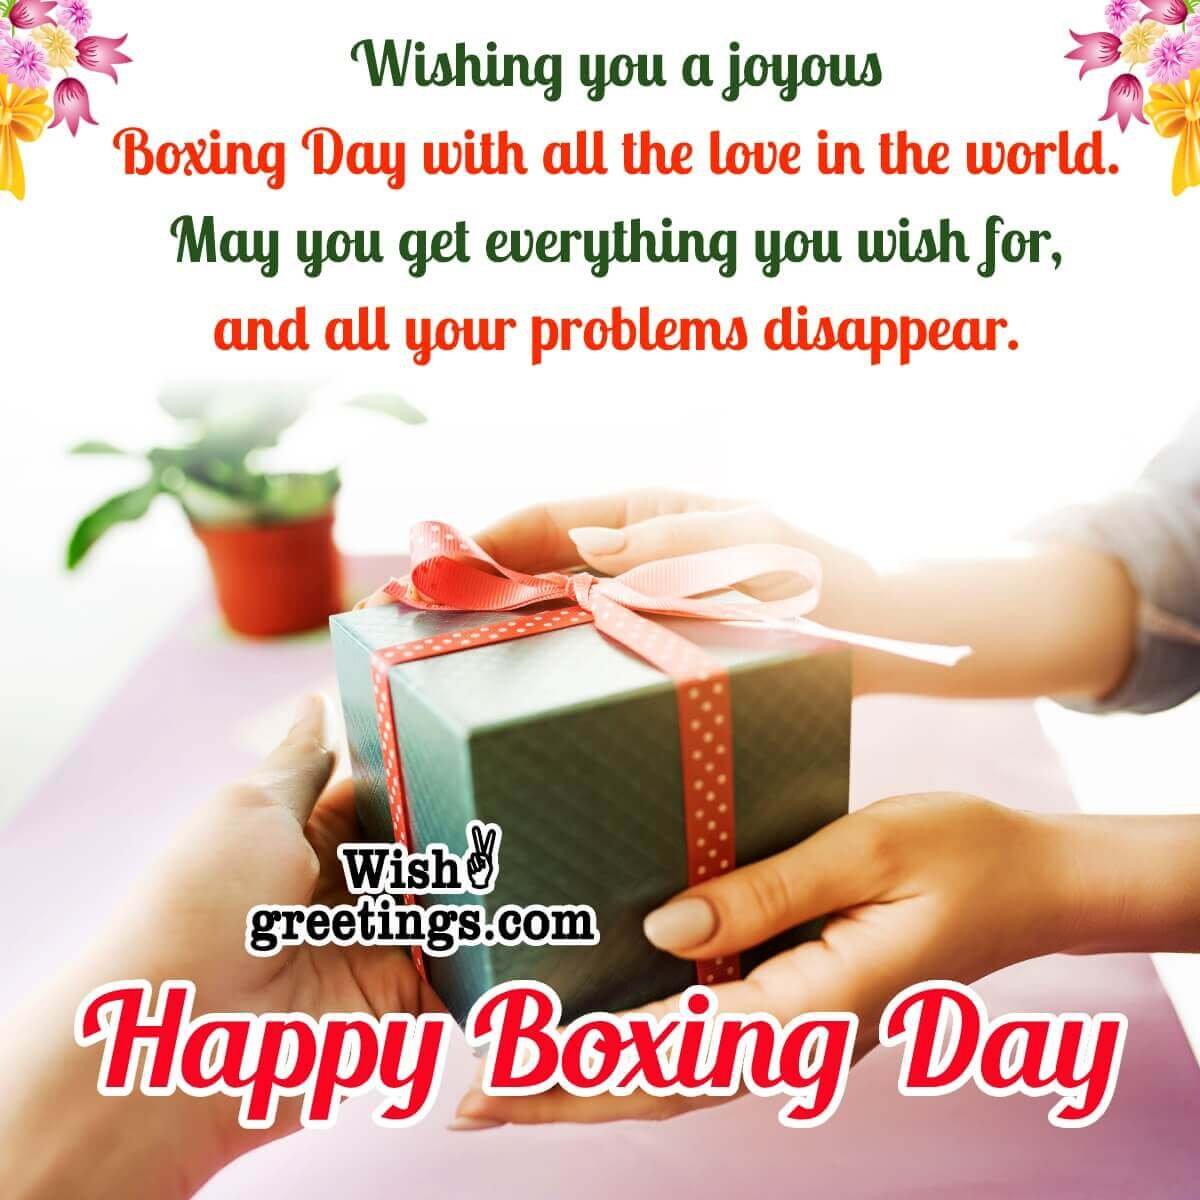 Boxing Day Greeting Image